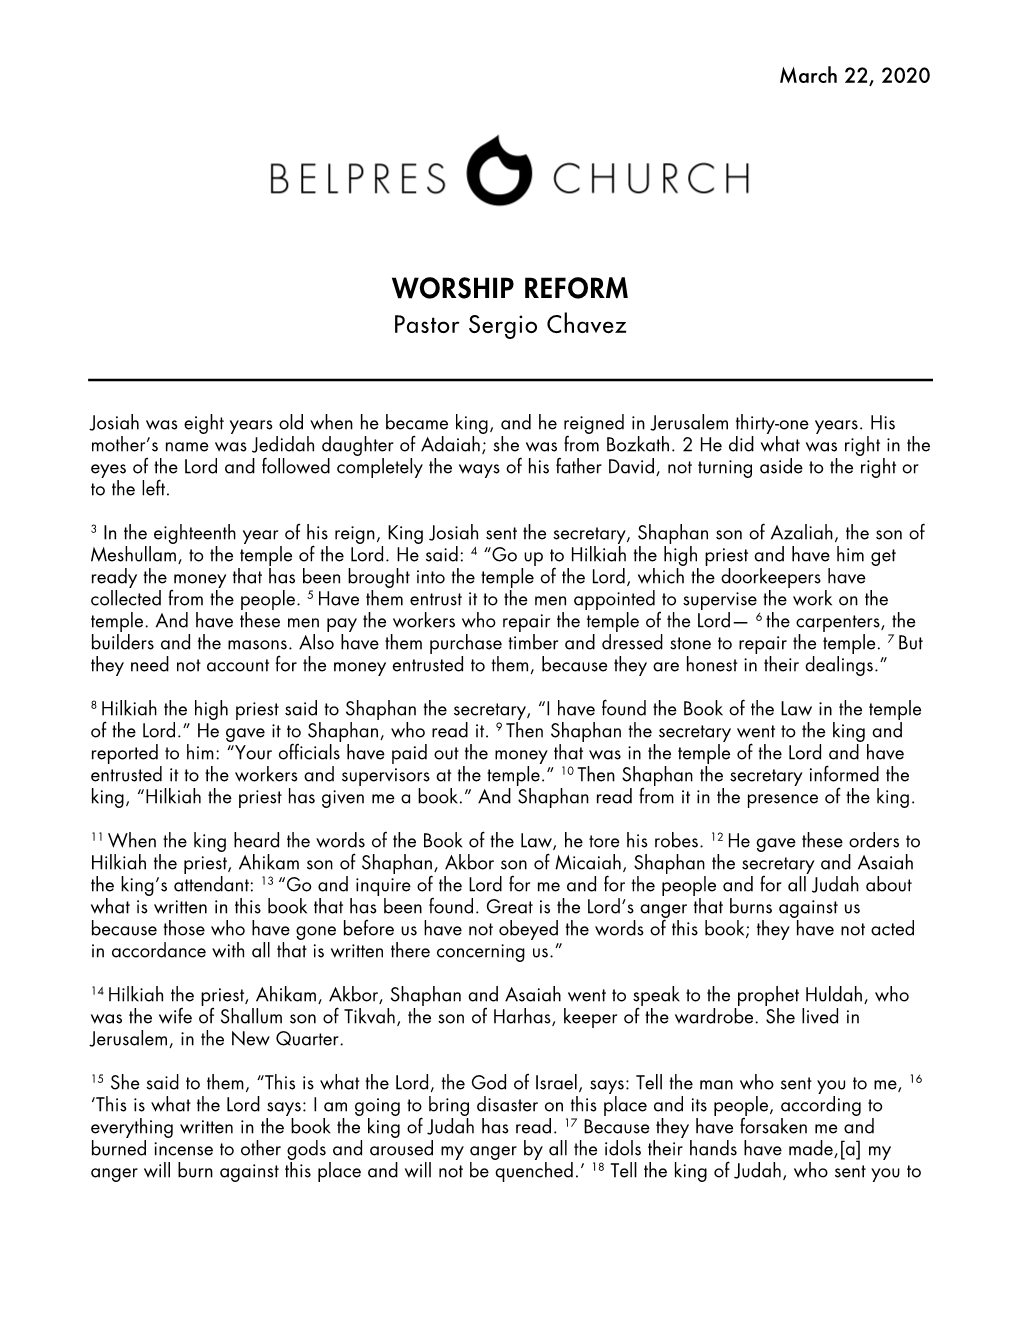 WORSHIP REFORM Pastor Sergio Chavez